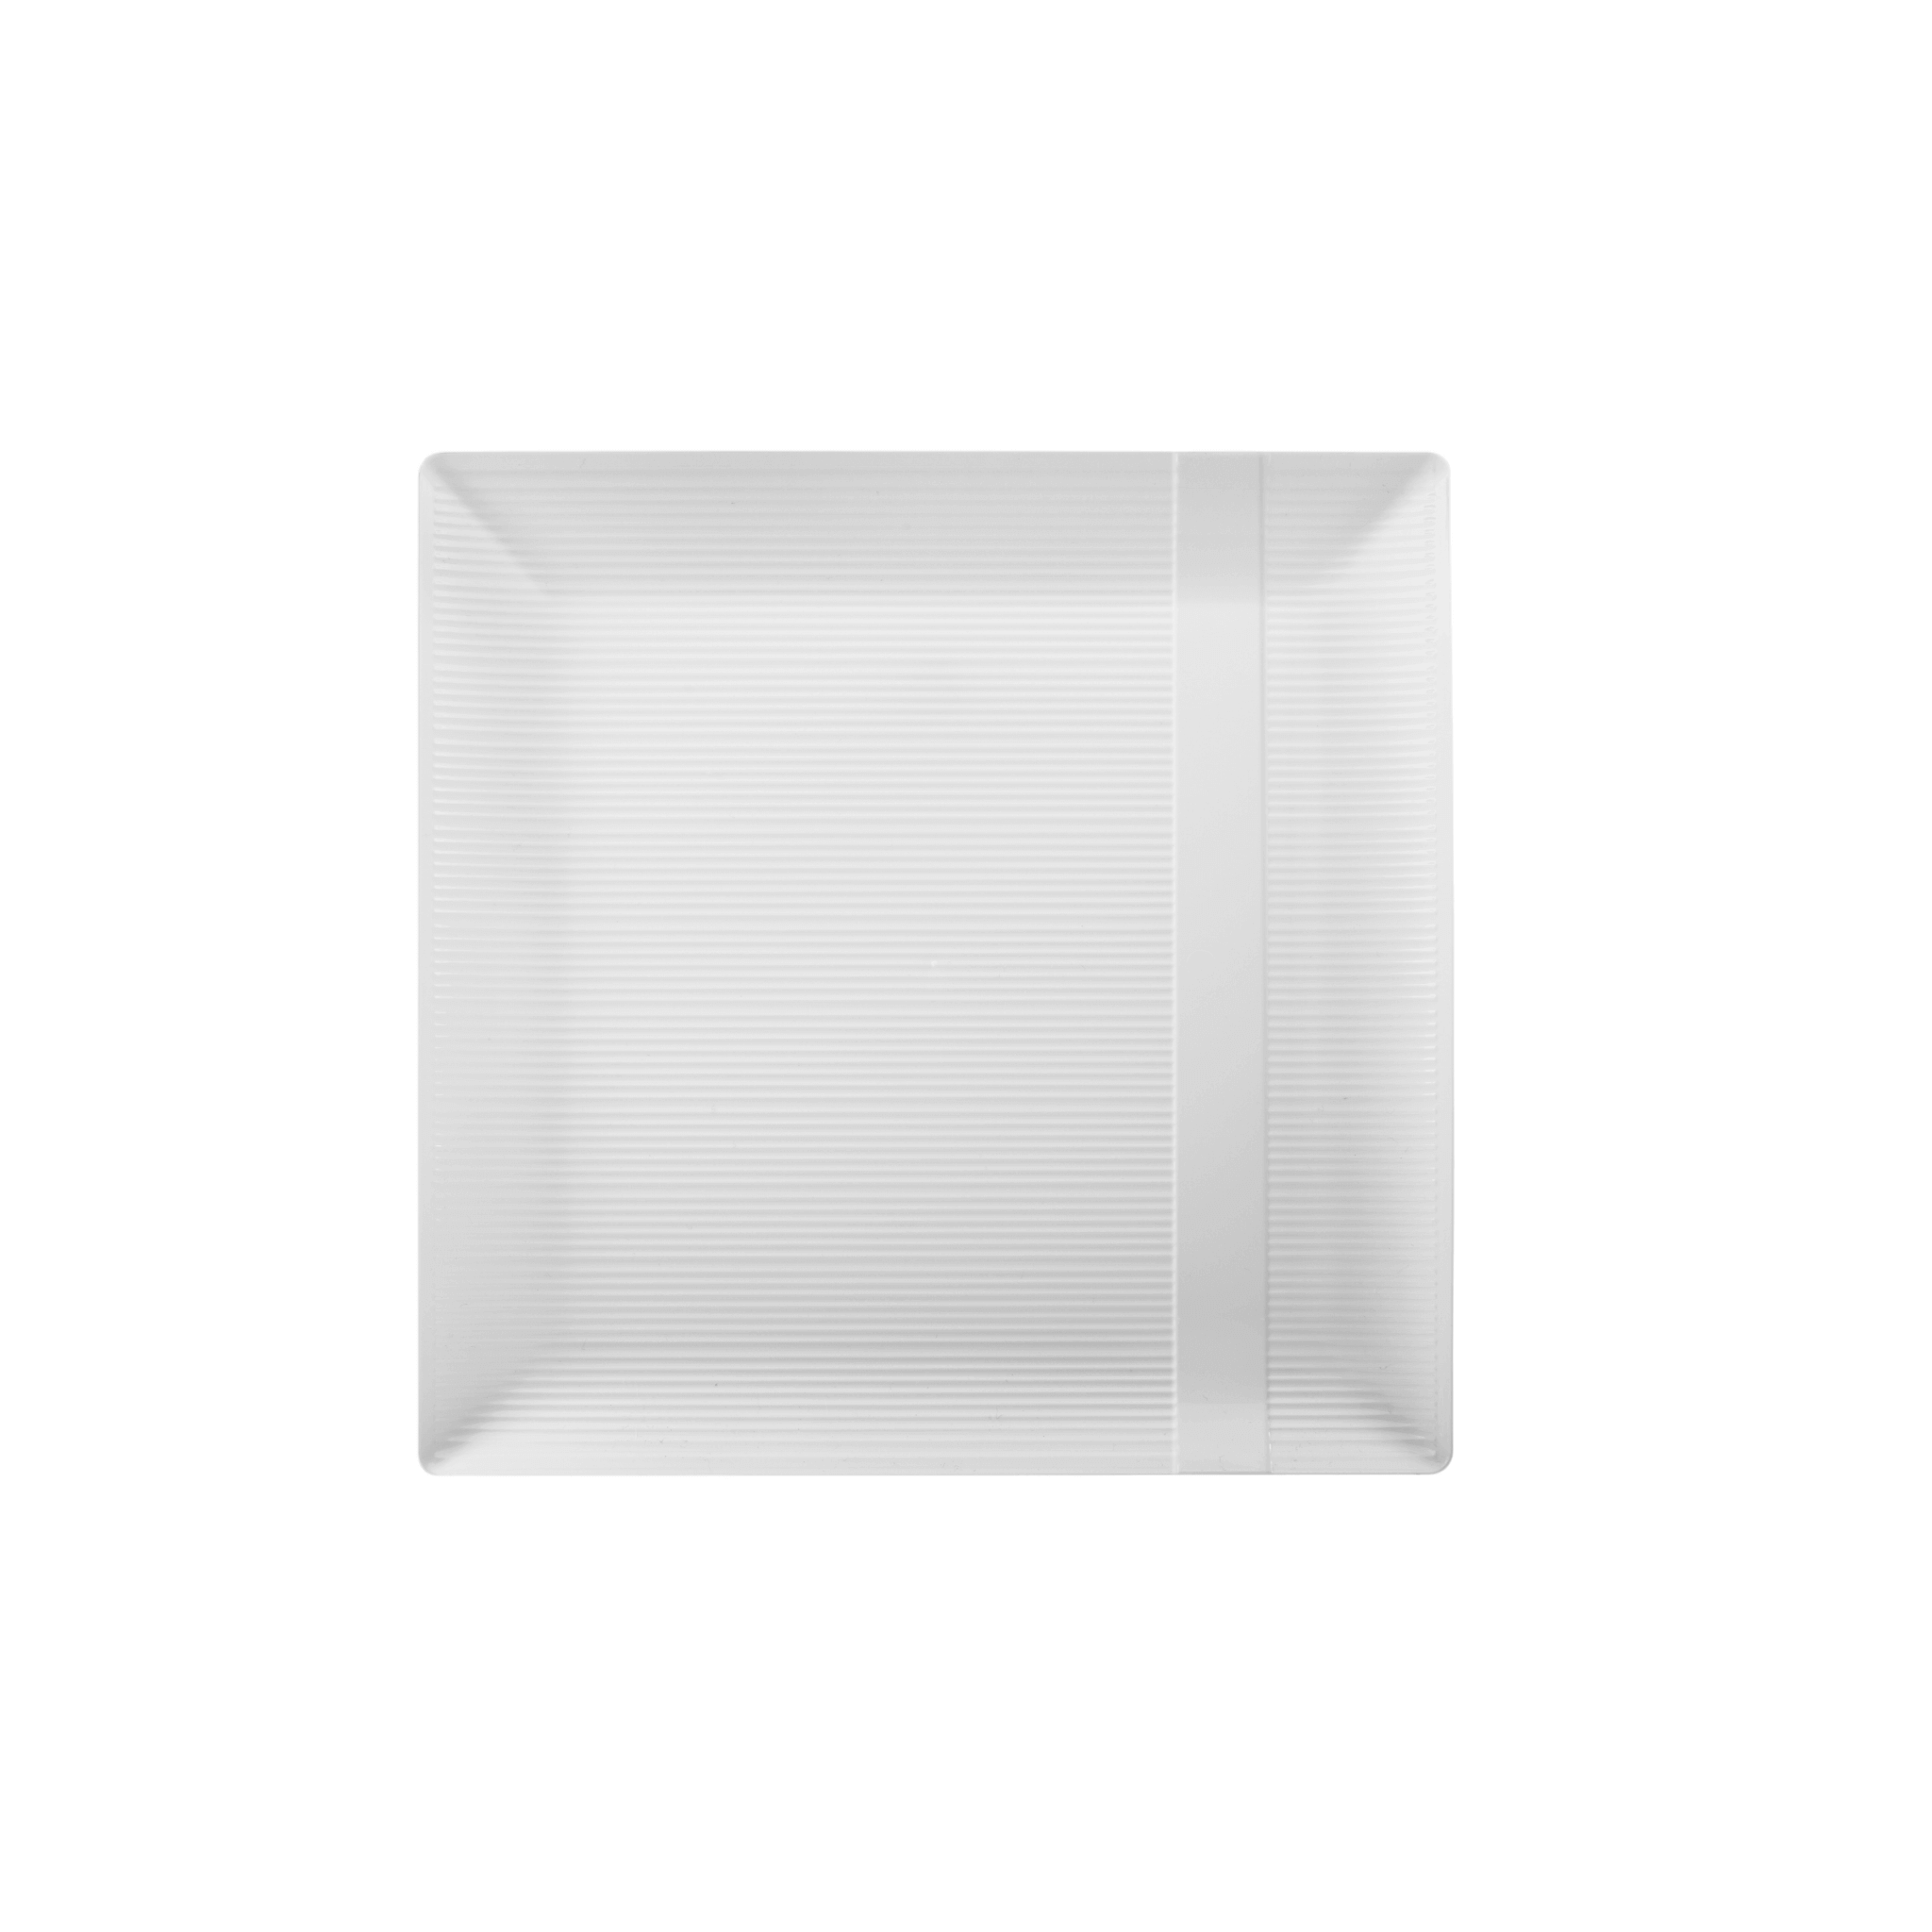 6.5" Zen Ridged White Square Plastic Plates (120 Count) - Yom Tov Settings